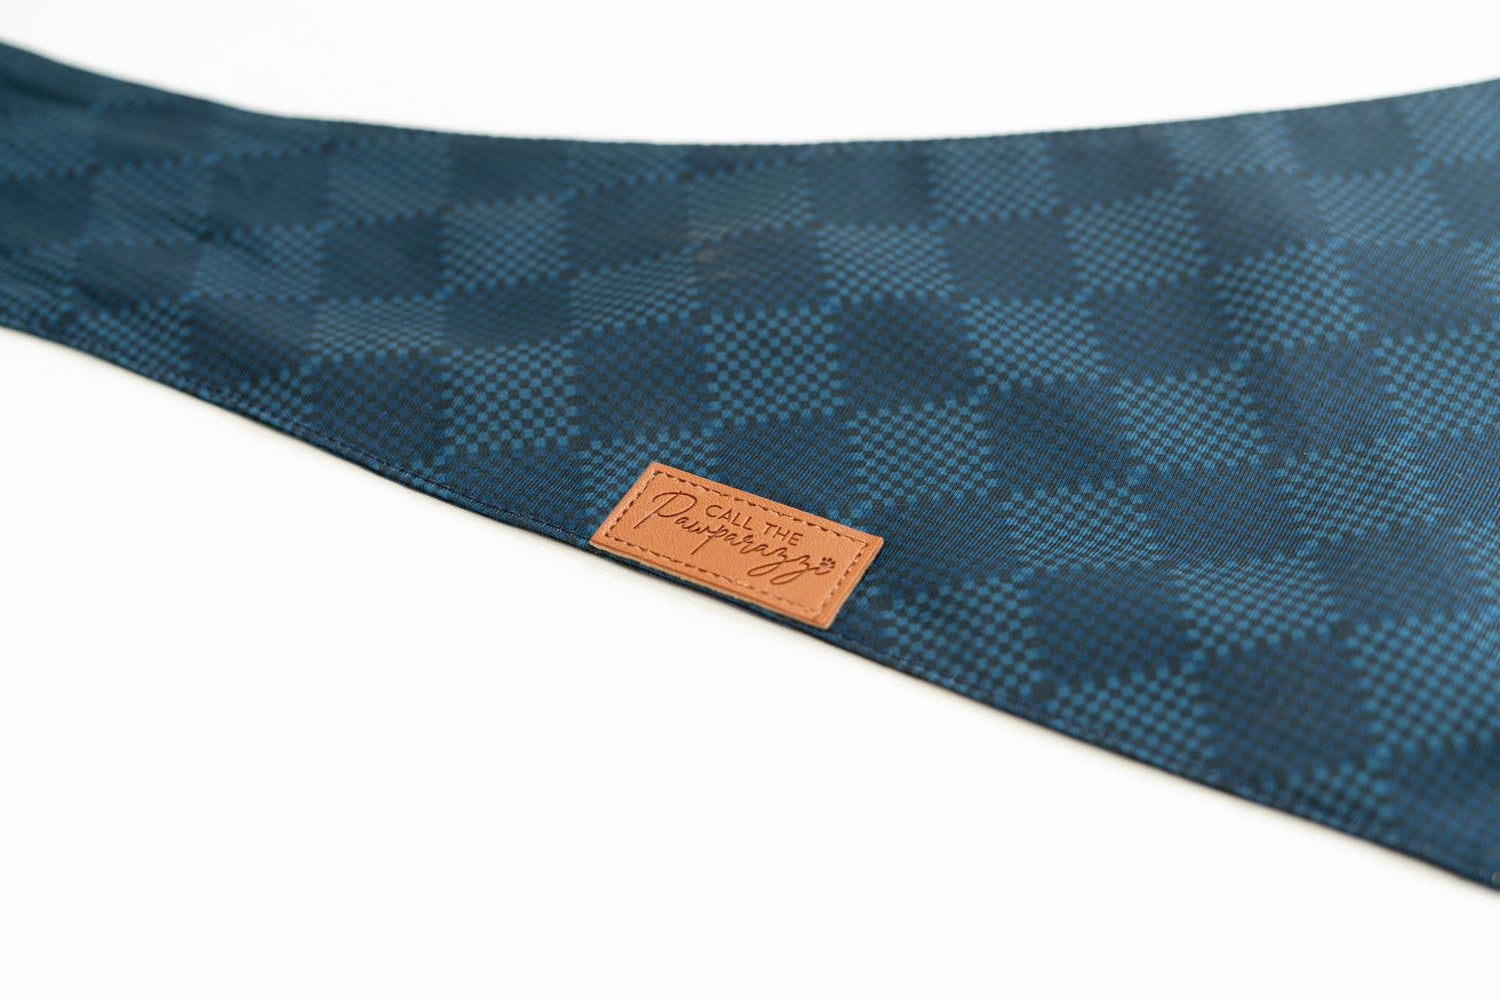 Louis Vuitton Discovery bumbag Damier Cobalt Race N40161 size